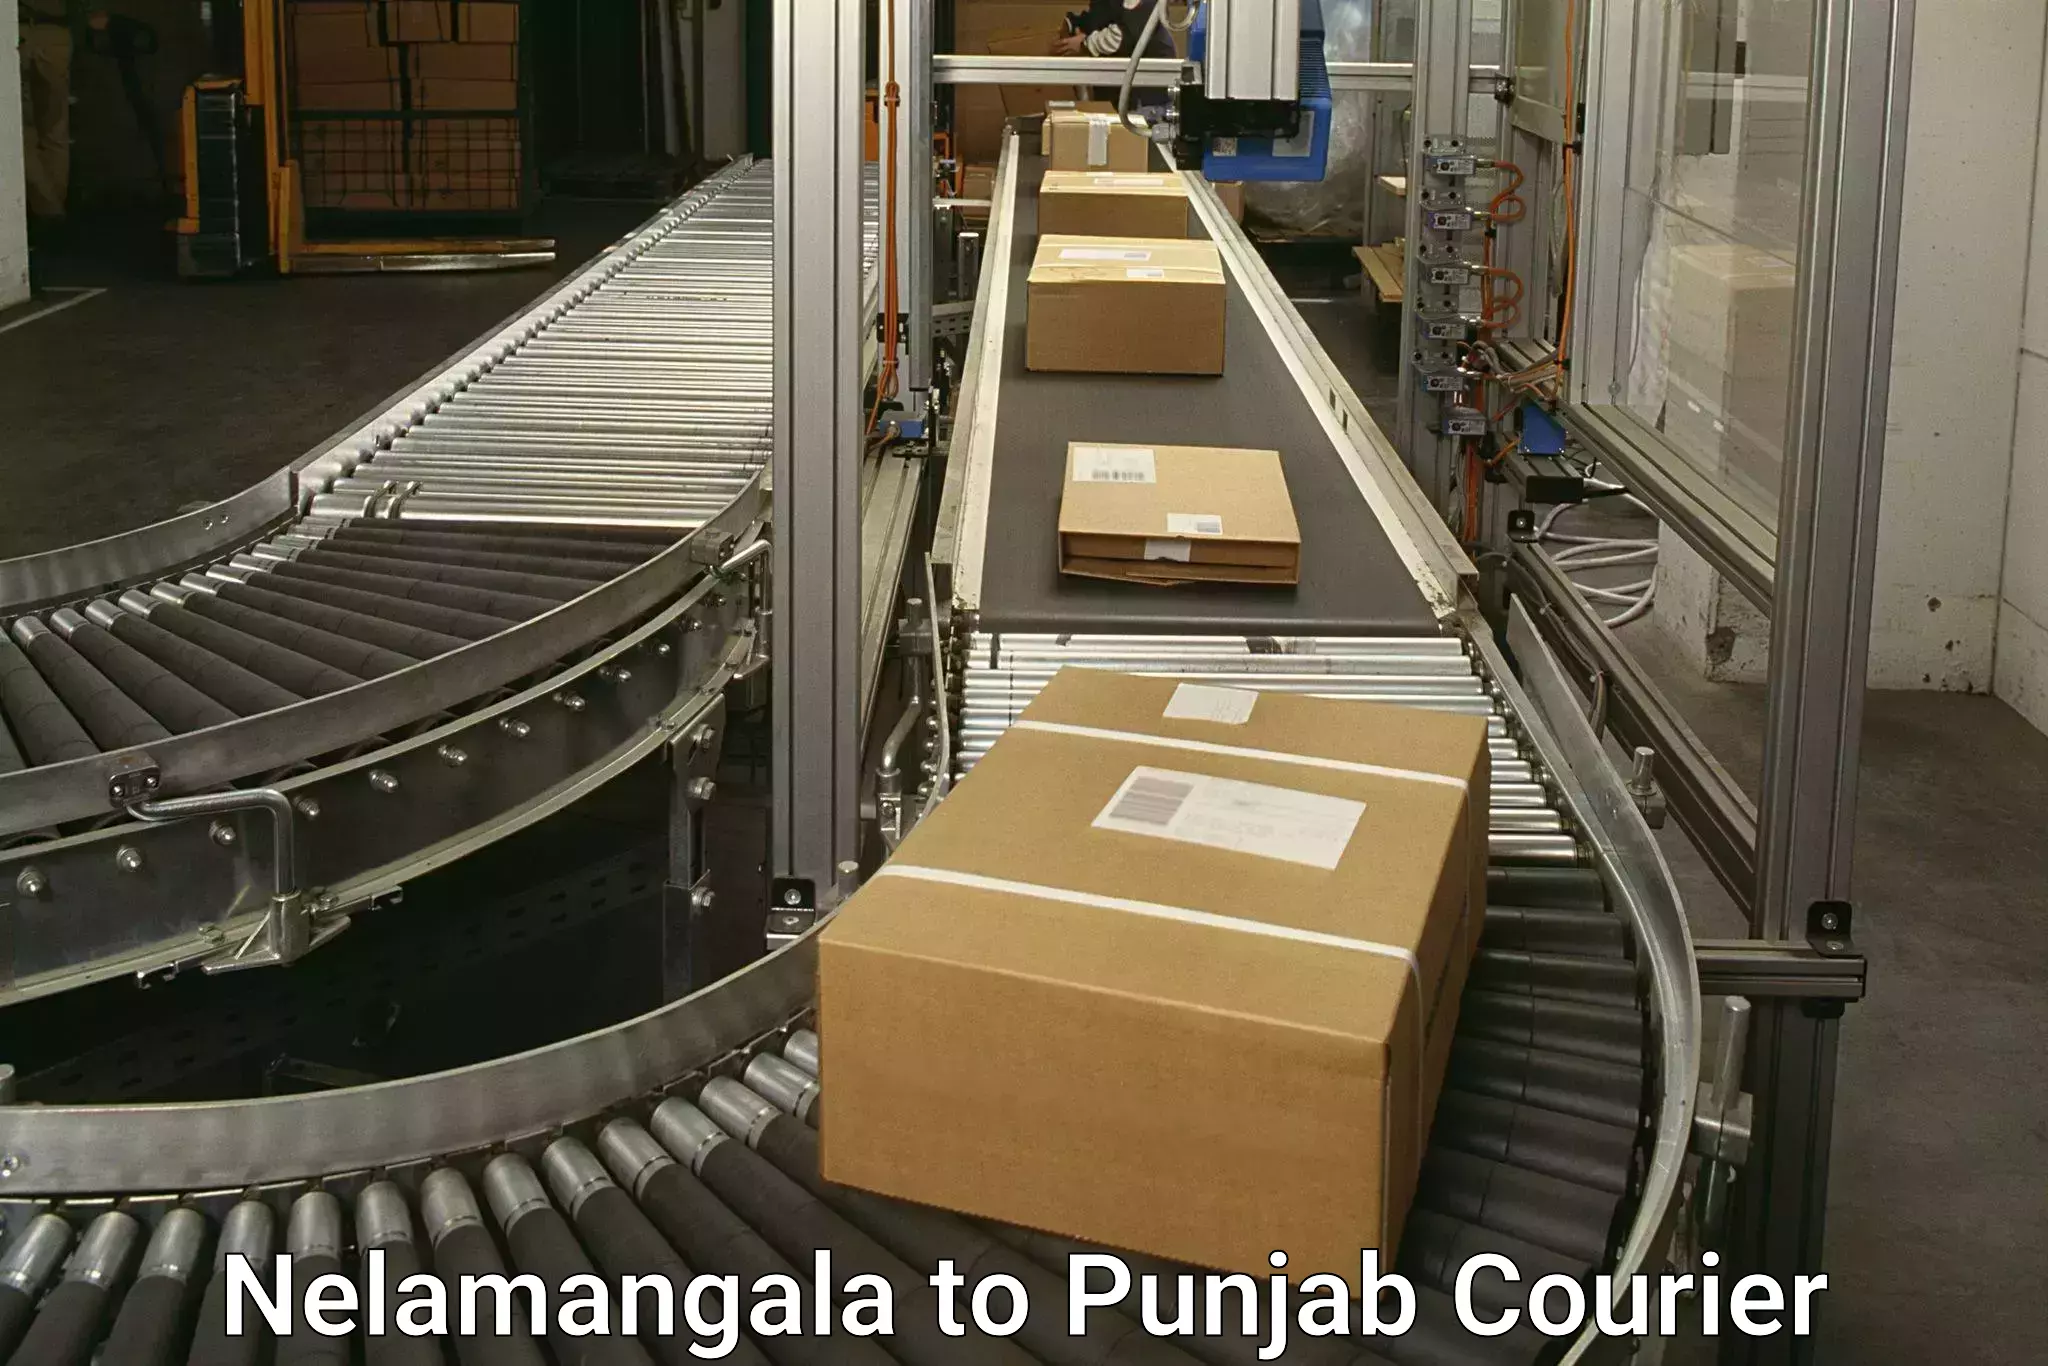 Courier service comparison Nelamangala to Talwara